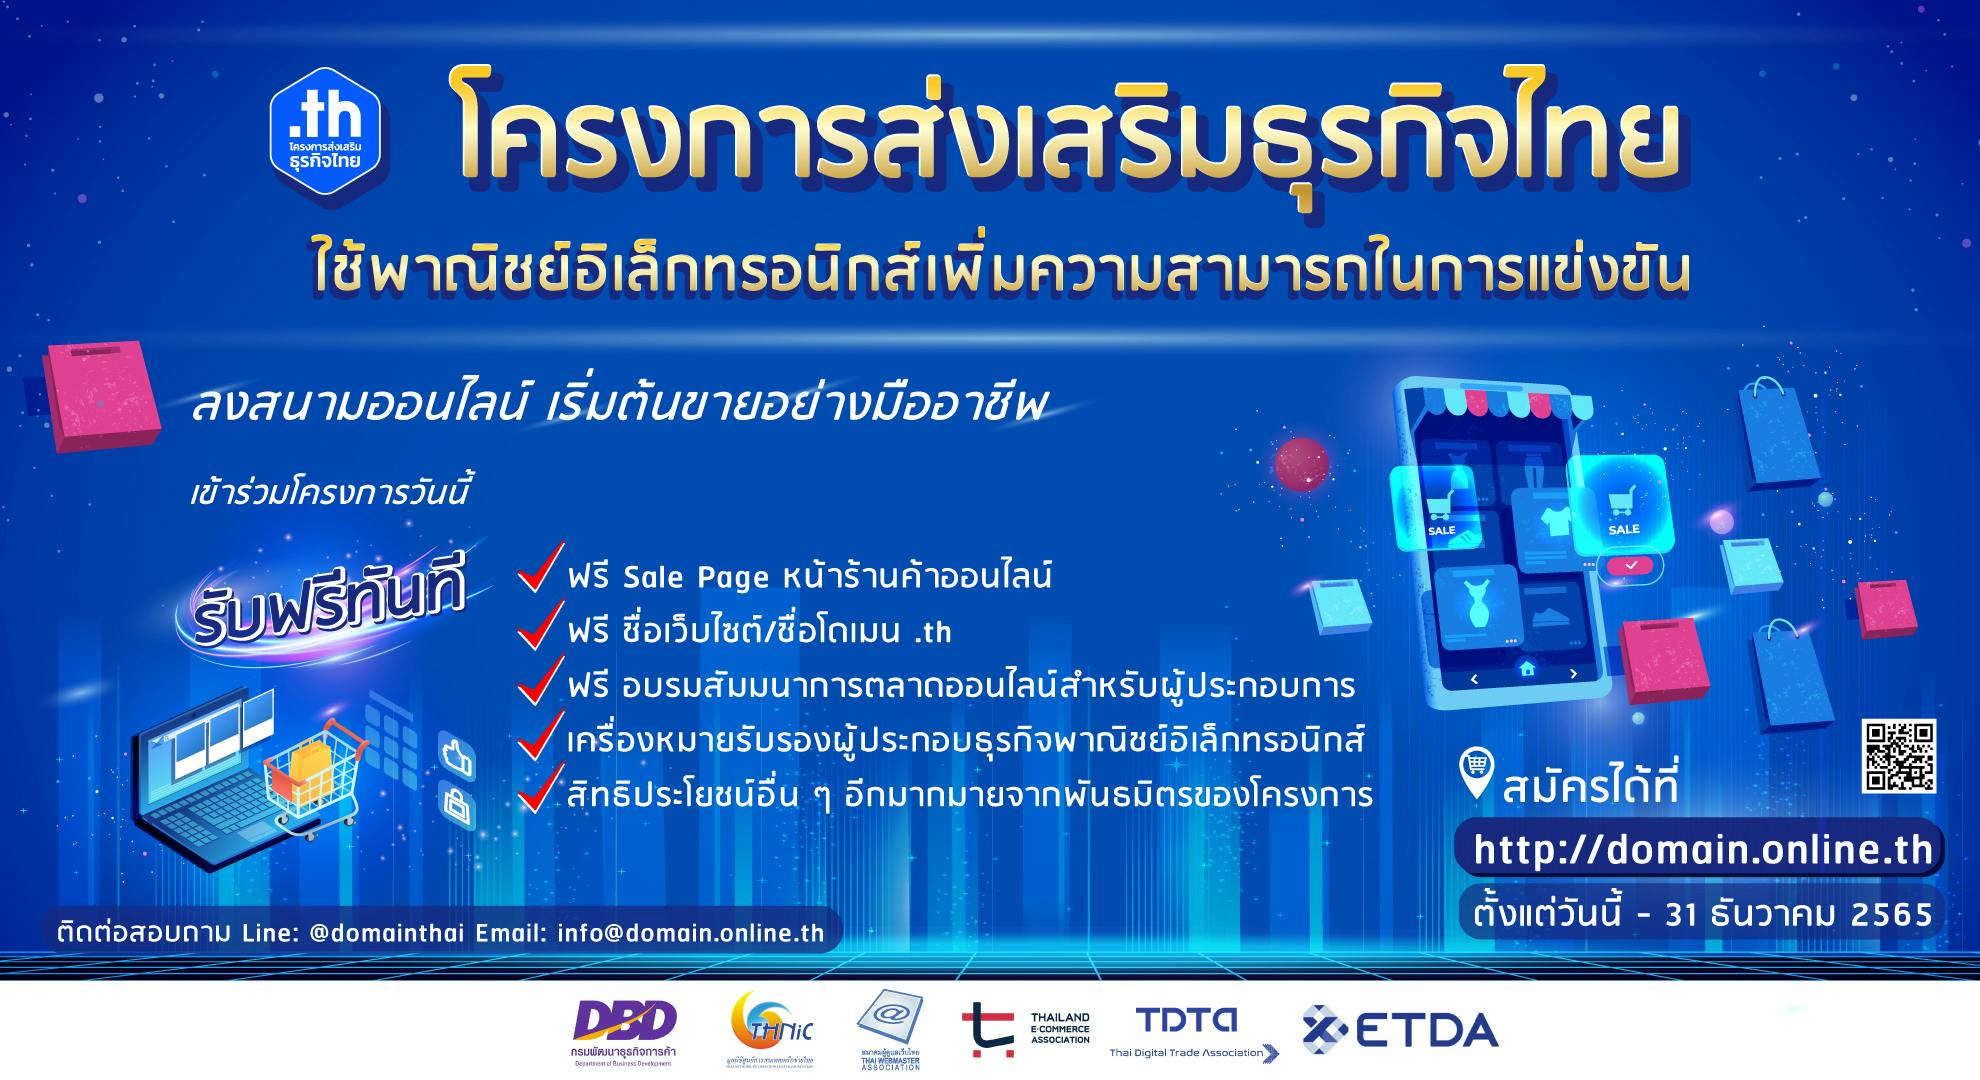 Cover Image for มูลนิธิศูนย์สารสนเทศเครือข่ายไทย (ทีเอชนิค) ร่วมกับกรมพัฒนาธุรกิจการค้า และ 4 องค์กรดิจิทัล สานต่อโครงการส่งเสริมธุรกิจไทยปี 2 สนับสนุนผู้ค้าก้าวสู่ผู้ประกอบการยุคดิจิทัล สมัครเข้าร่วมโครงการรับฟรี เซลเพจหน้าร้านออนไลน์ พร้อมชื่อโดเมน .th